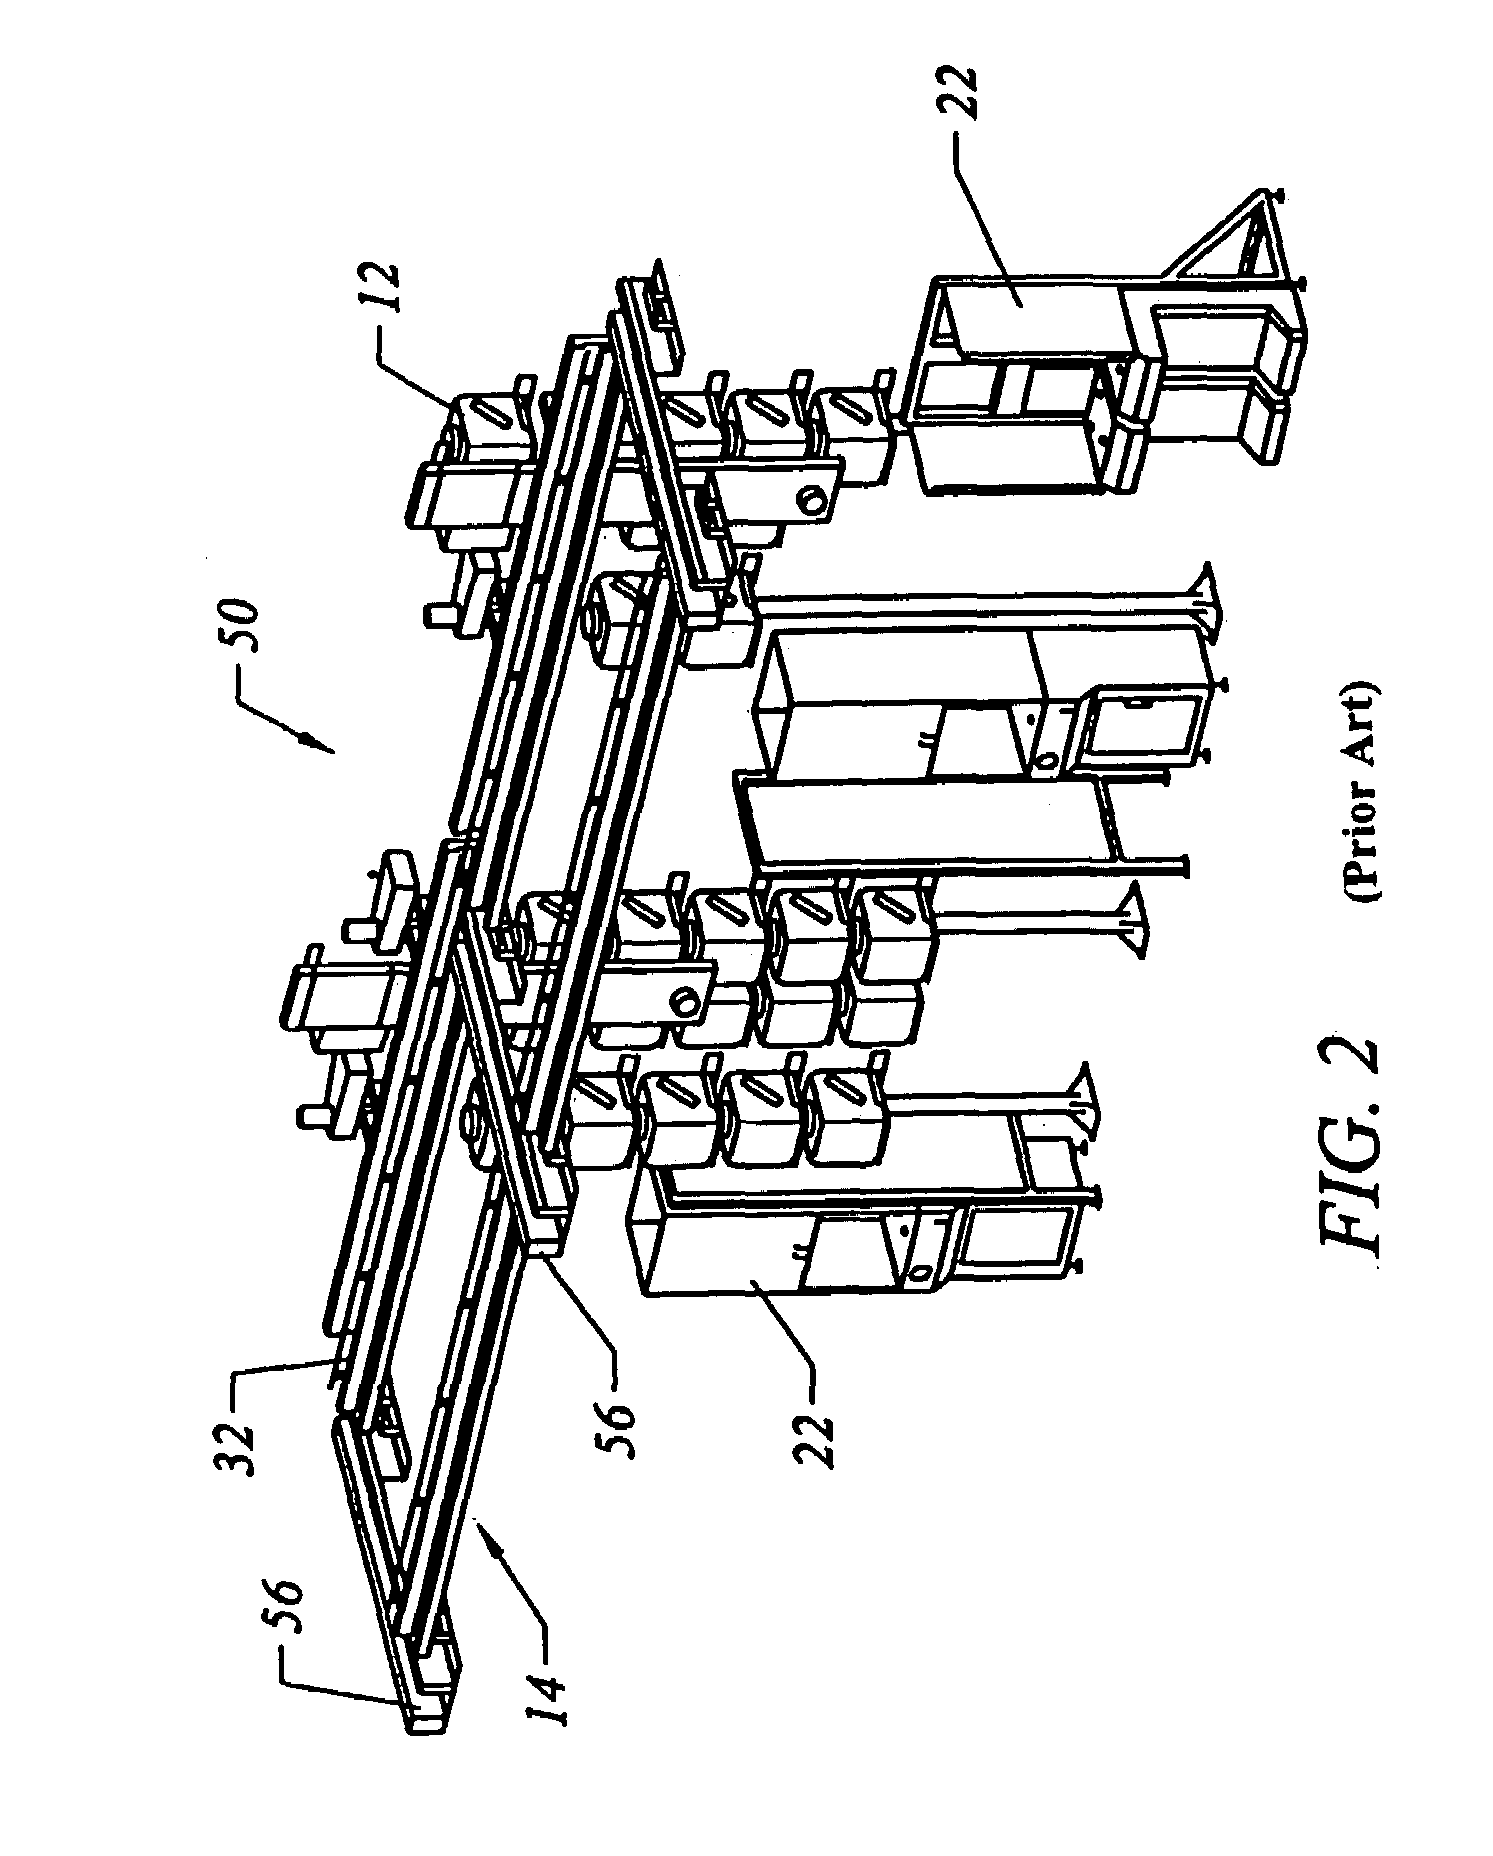 Universal modular wafer transport system